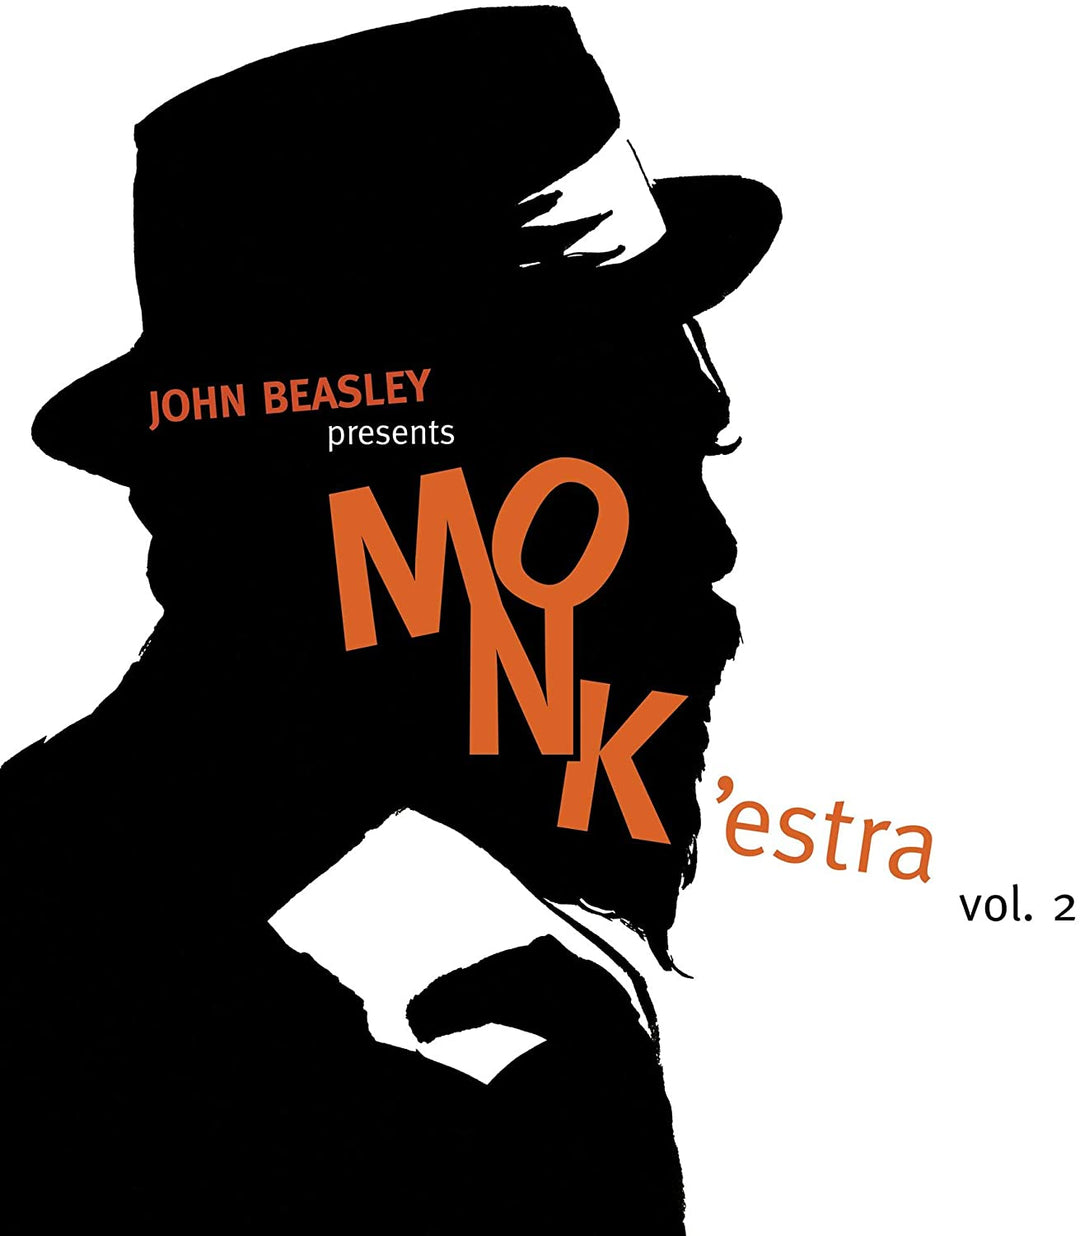 MONK'estra Vol. 2 - John Beasley [Audio CD]